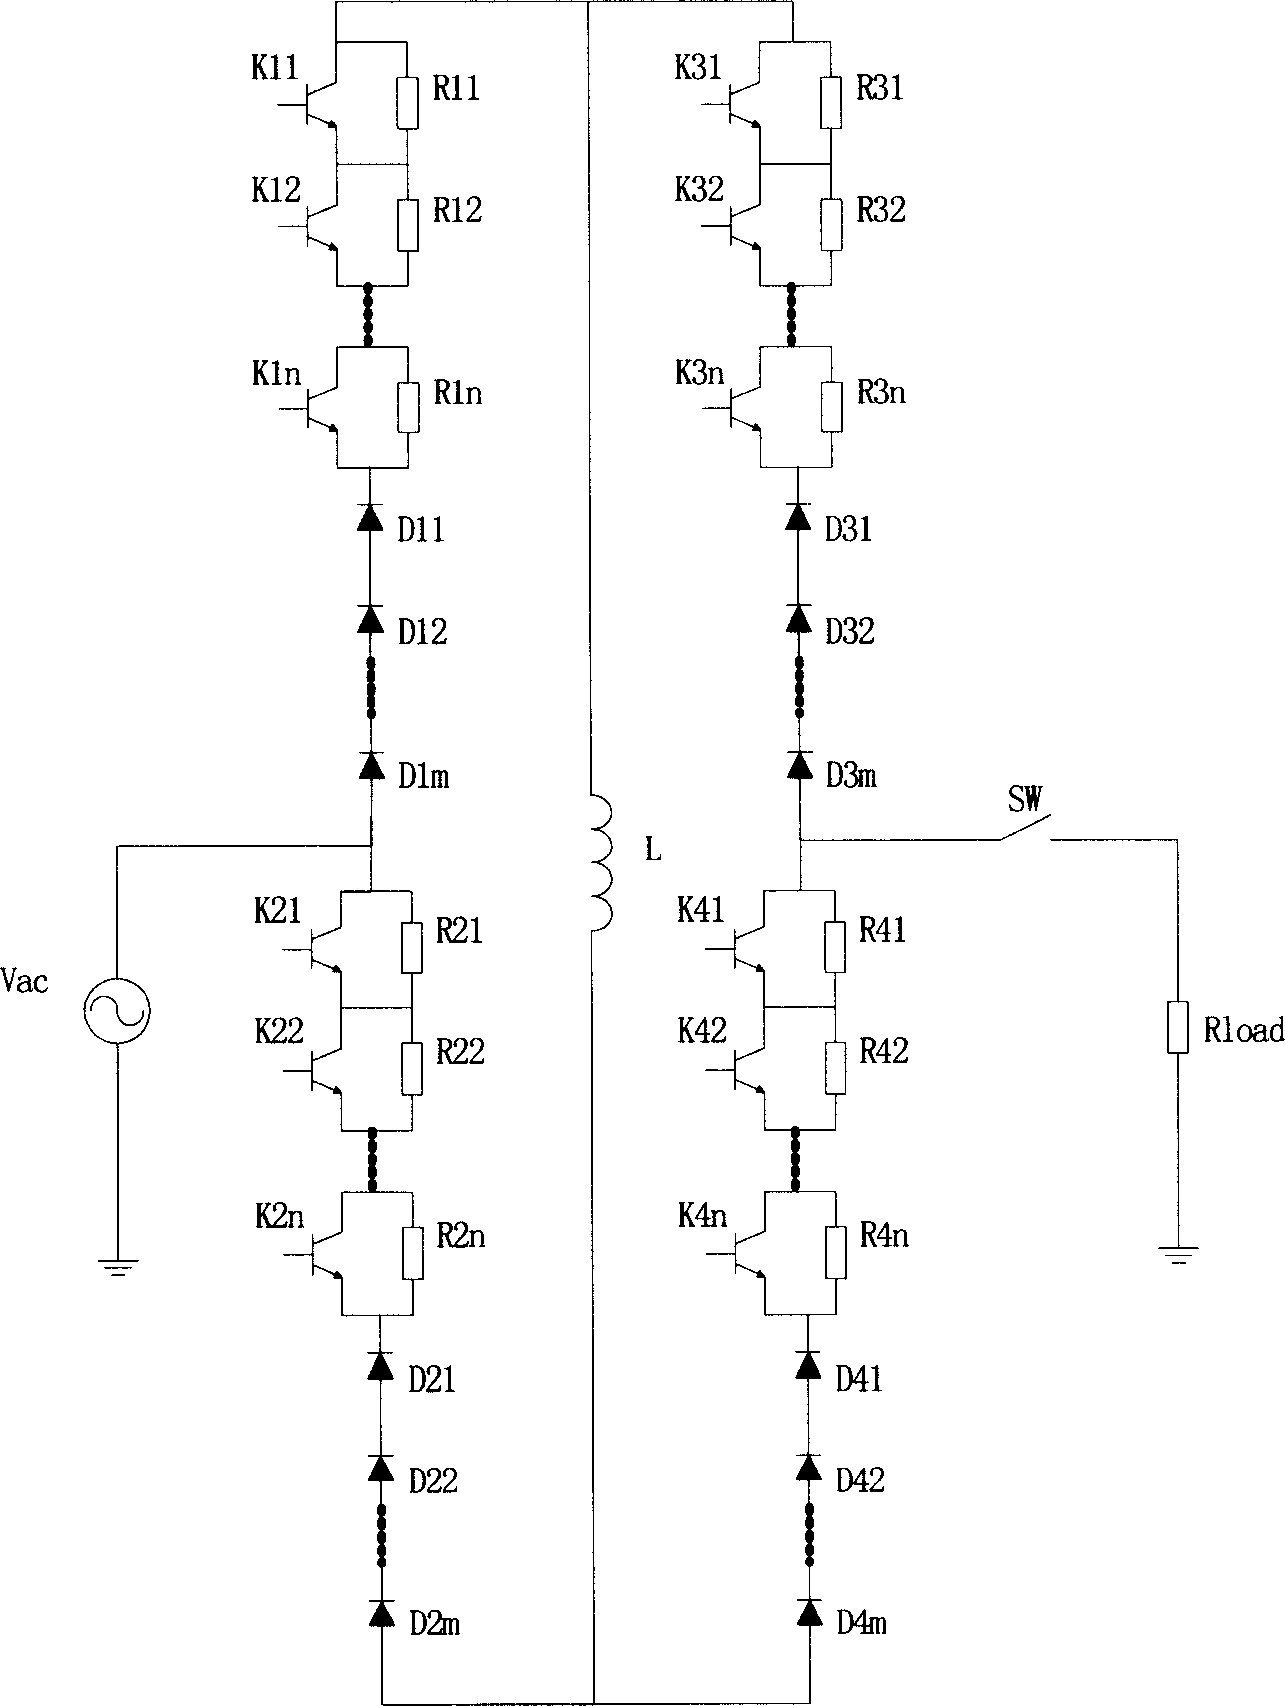 Short circuit fault current limiter